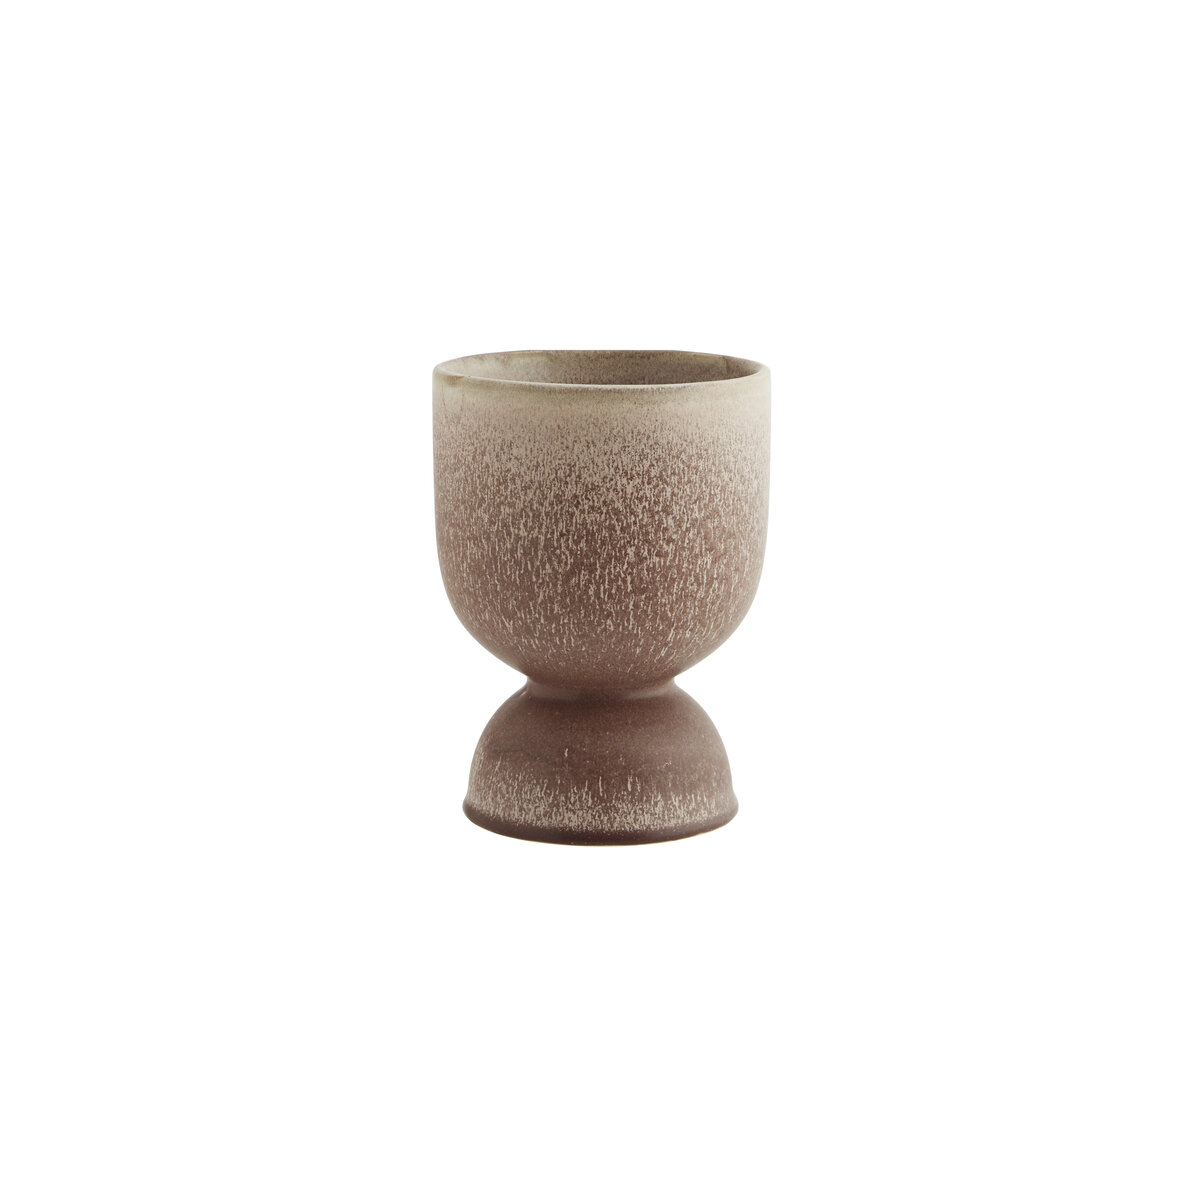 Ralf - Stoneware vase, 19 cm